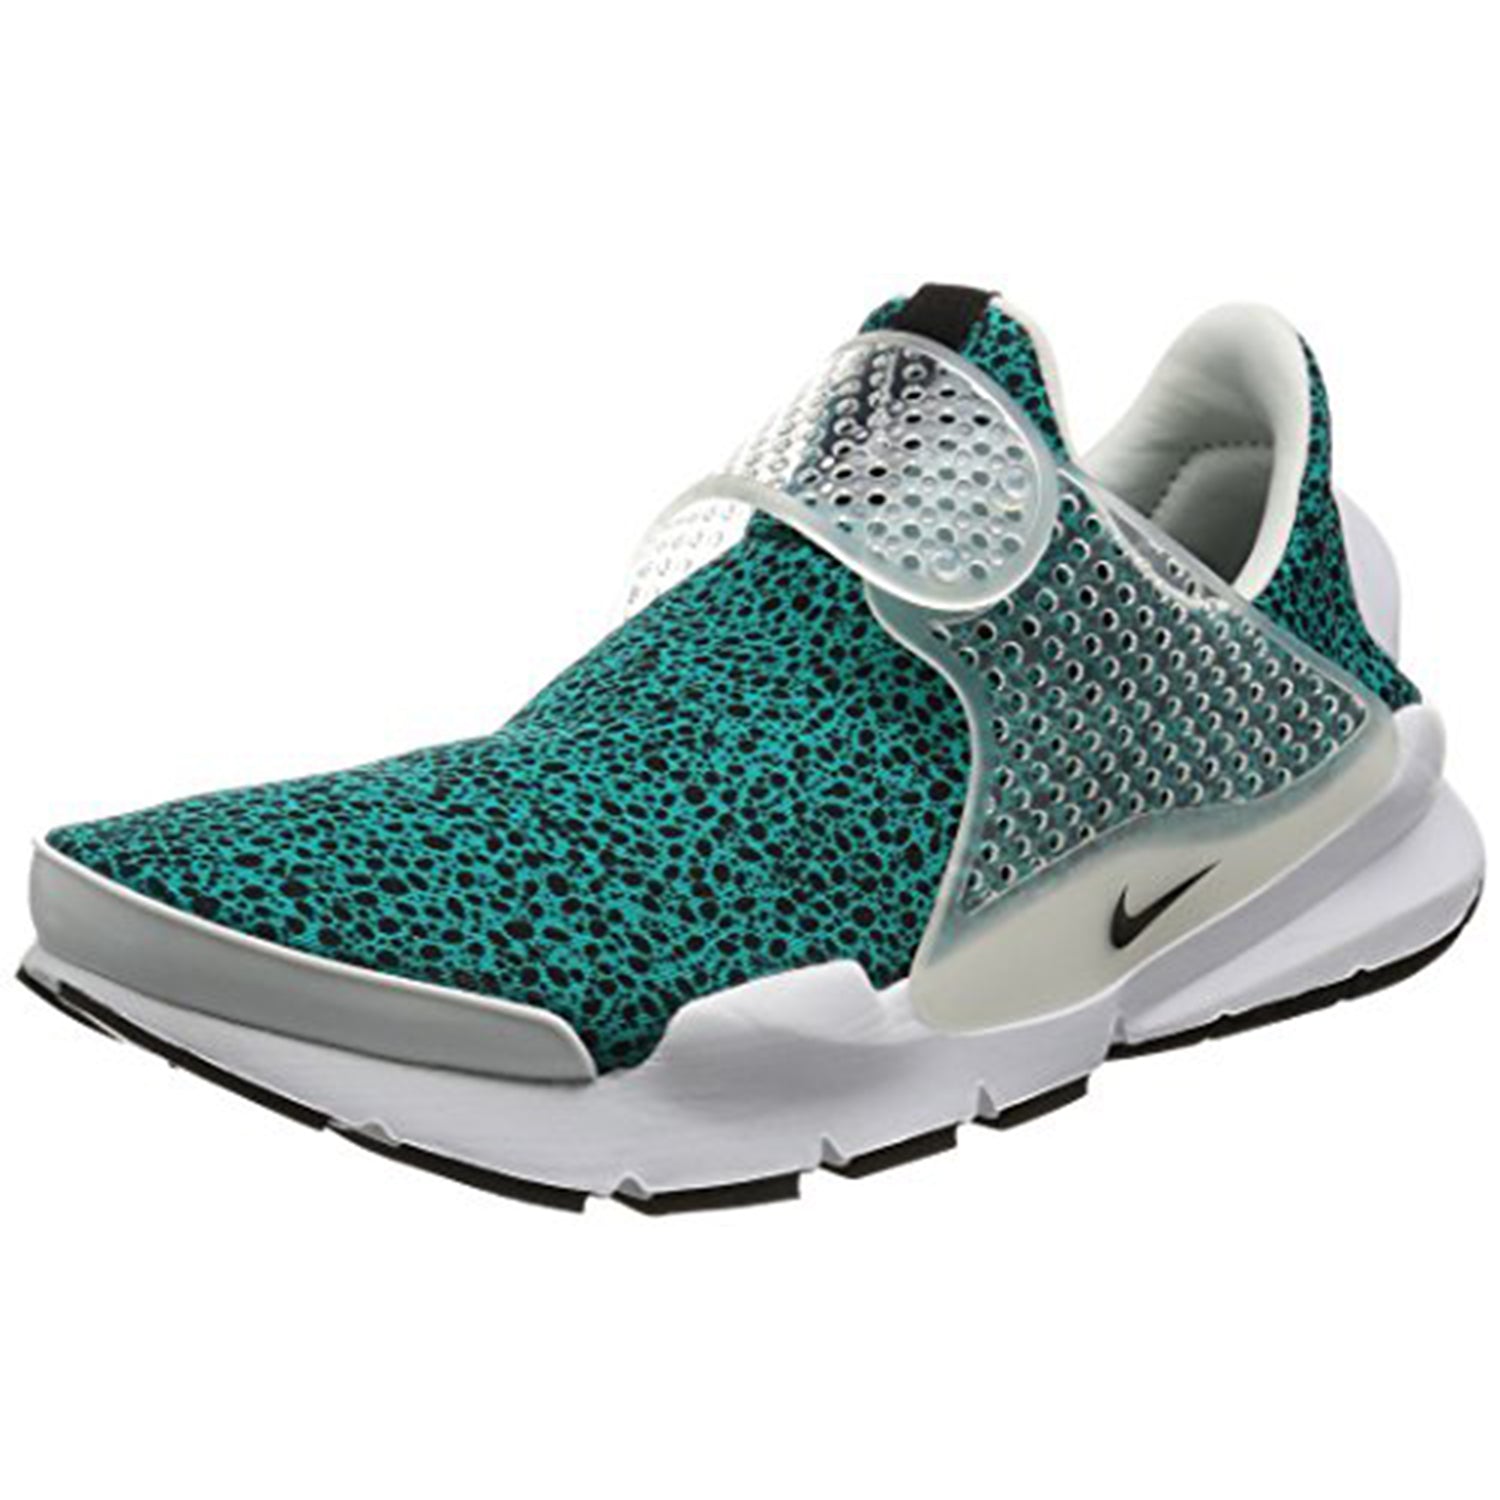 Nike Hombre Sock Dart Qs Talla 8 - 942198 300 Turbo Verde/Negro – Sneaker Binge